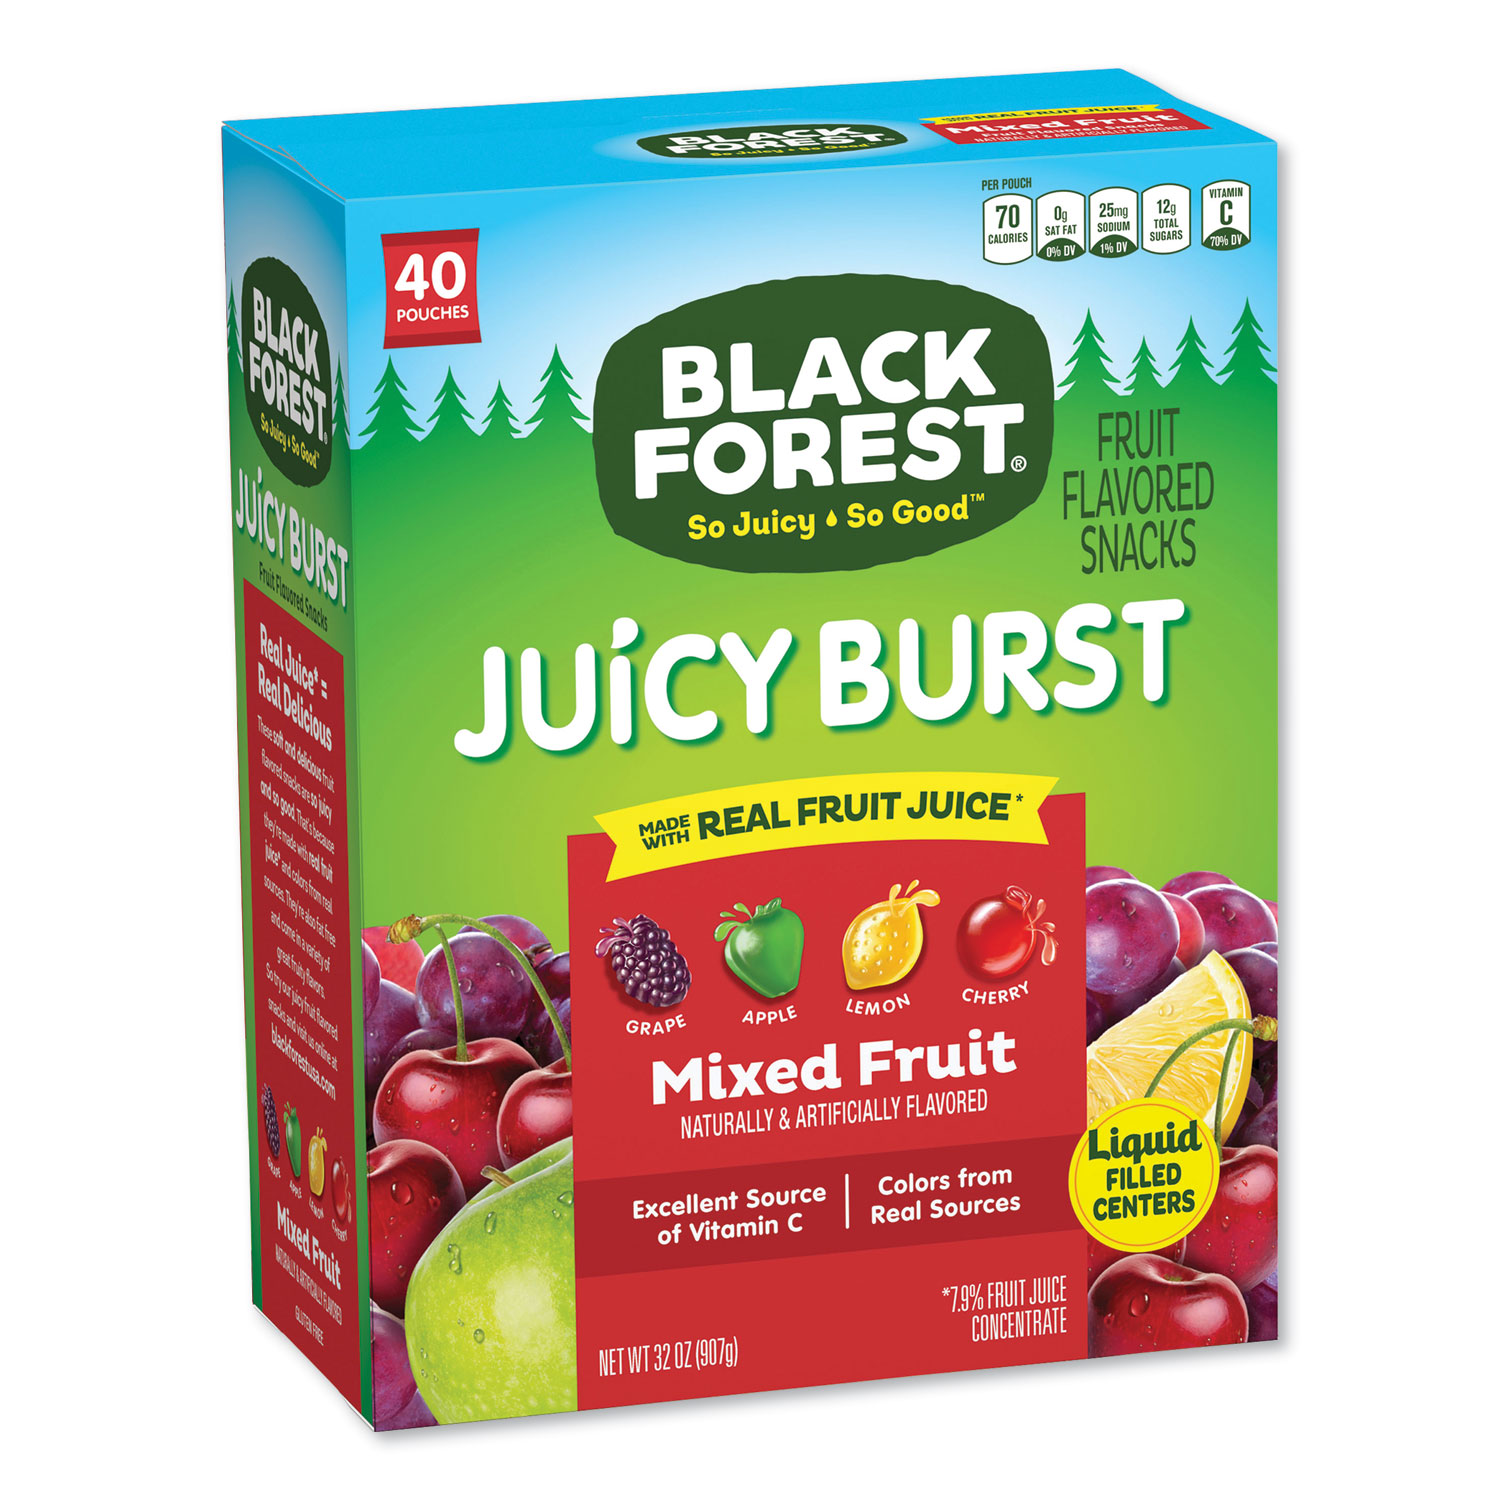 Black Forest® Juicy Burst Fruit Flavored Snack, Mixed Fruit, 32 oz, 40/Box